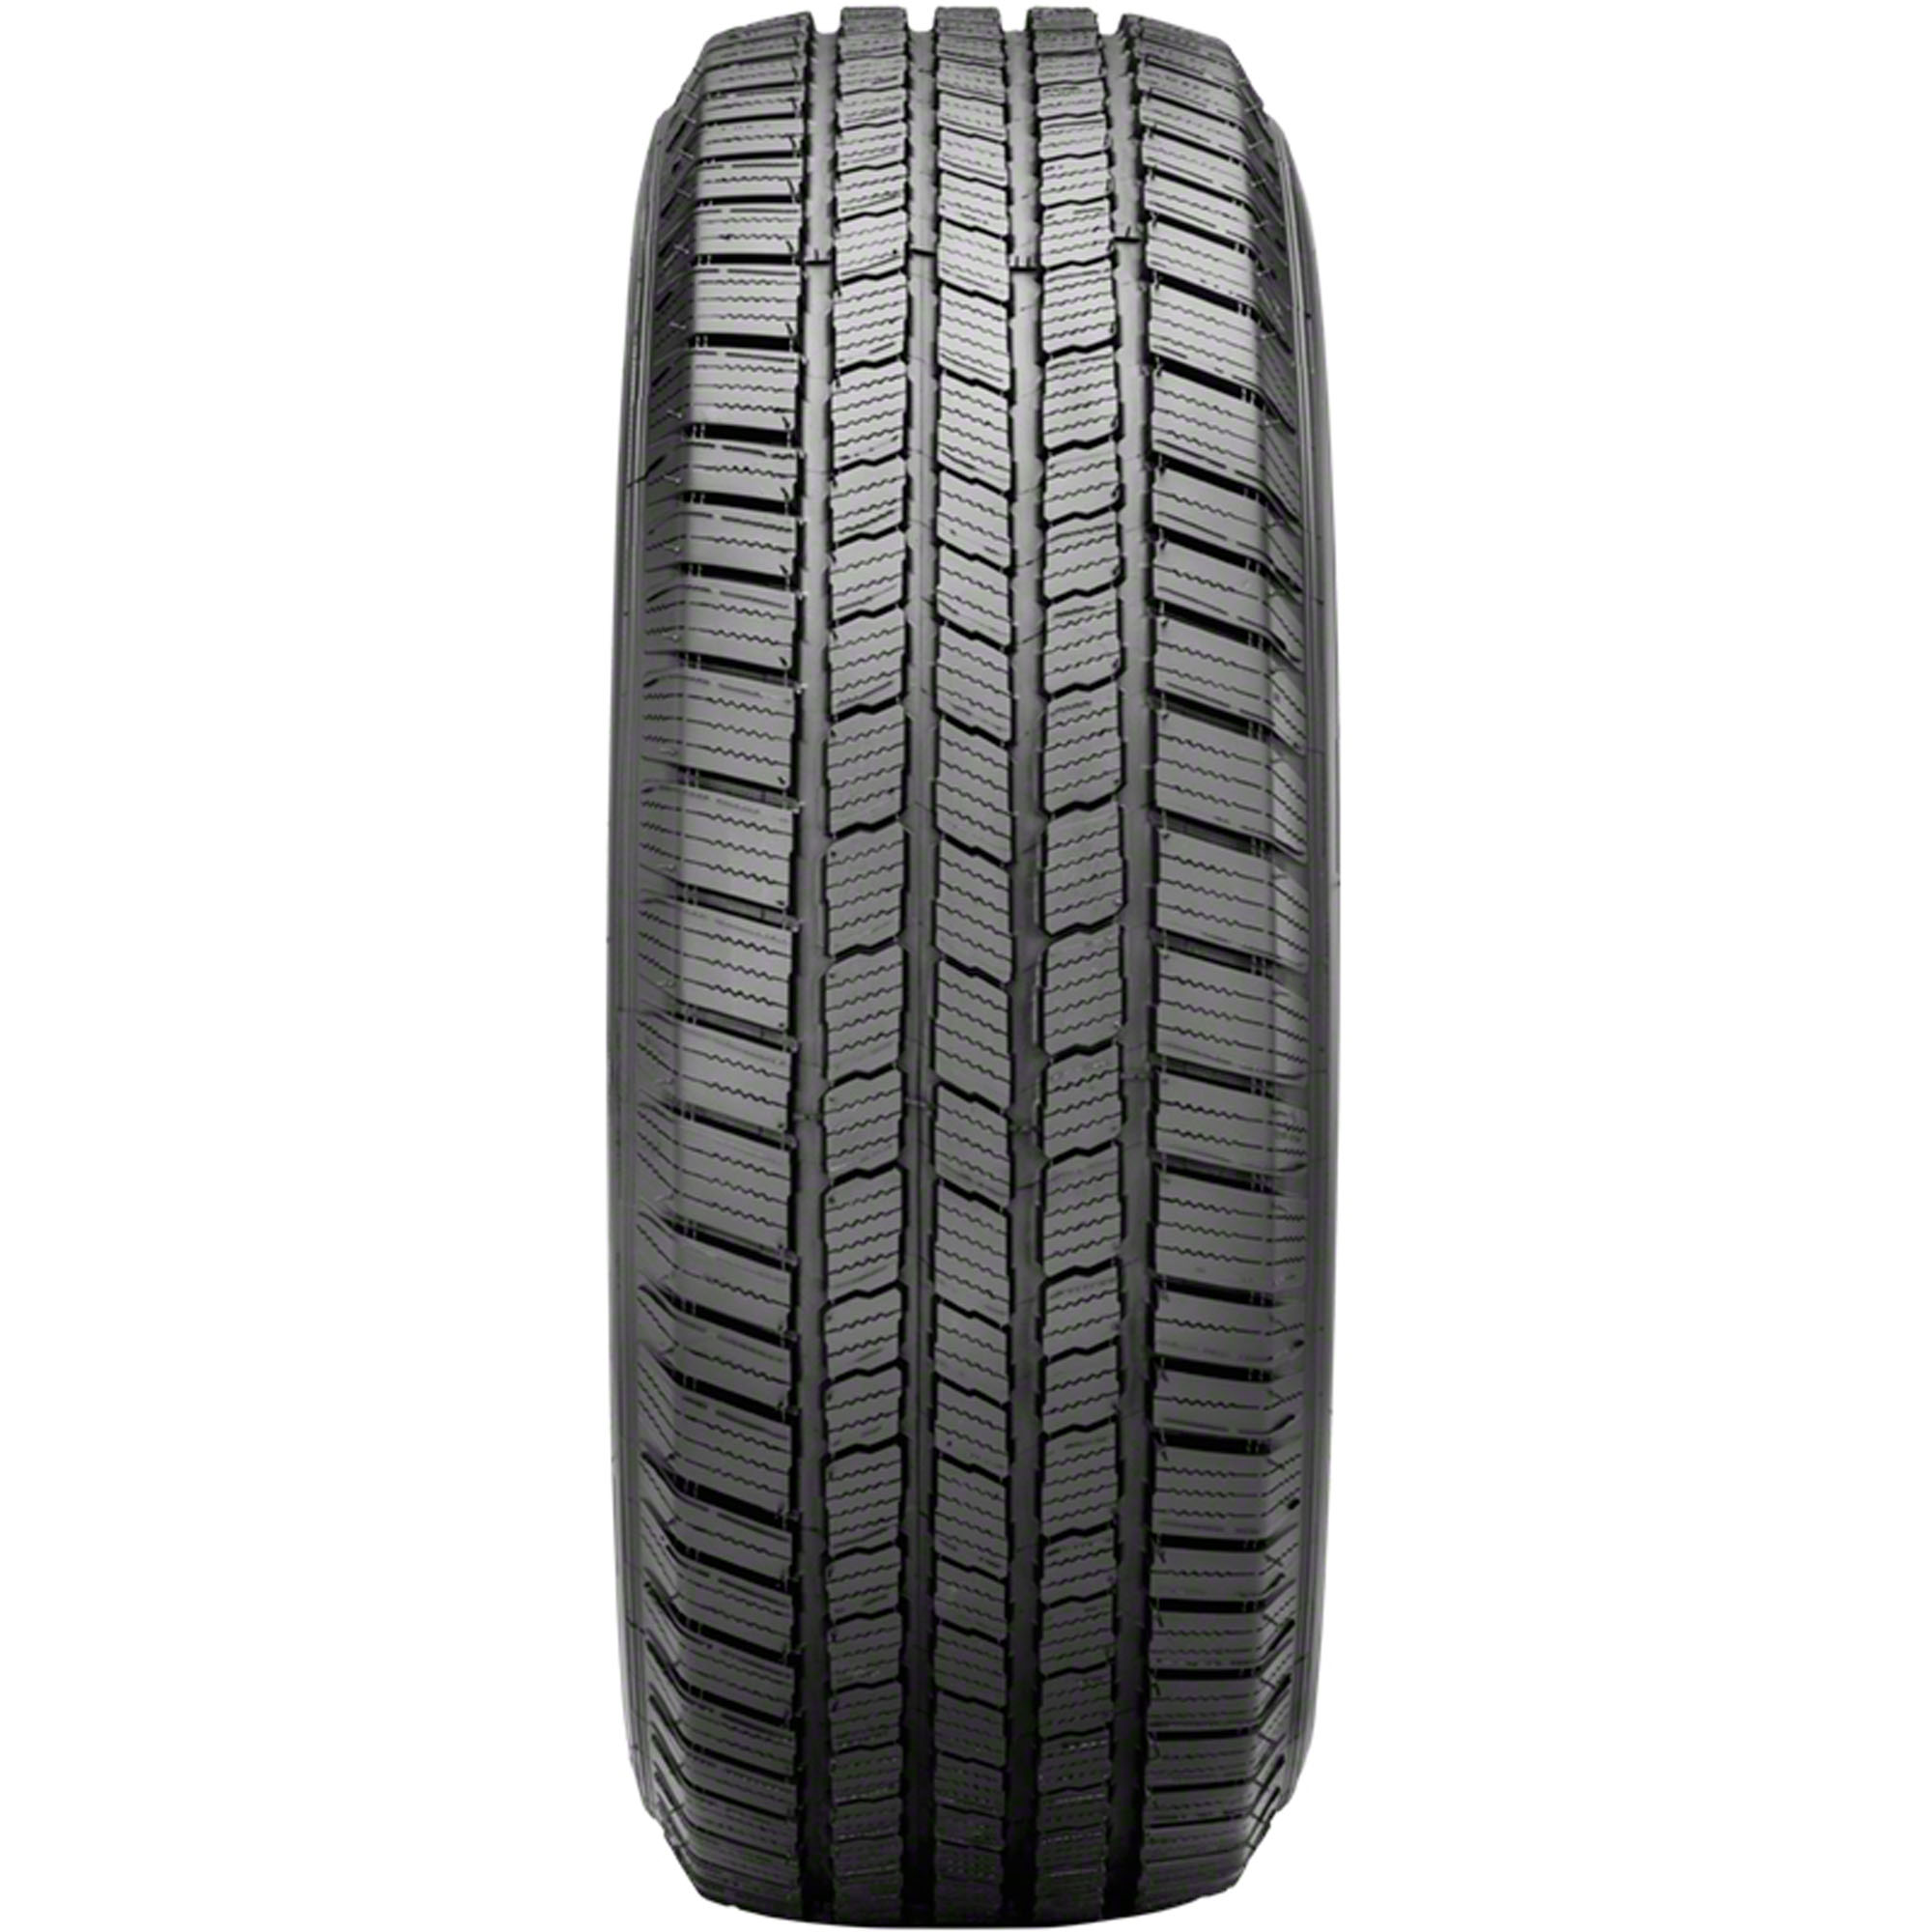 Michelin Defender LTX M/S All Season 225/65R17 102H Light Truck Tire - image 4 of 23